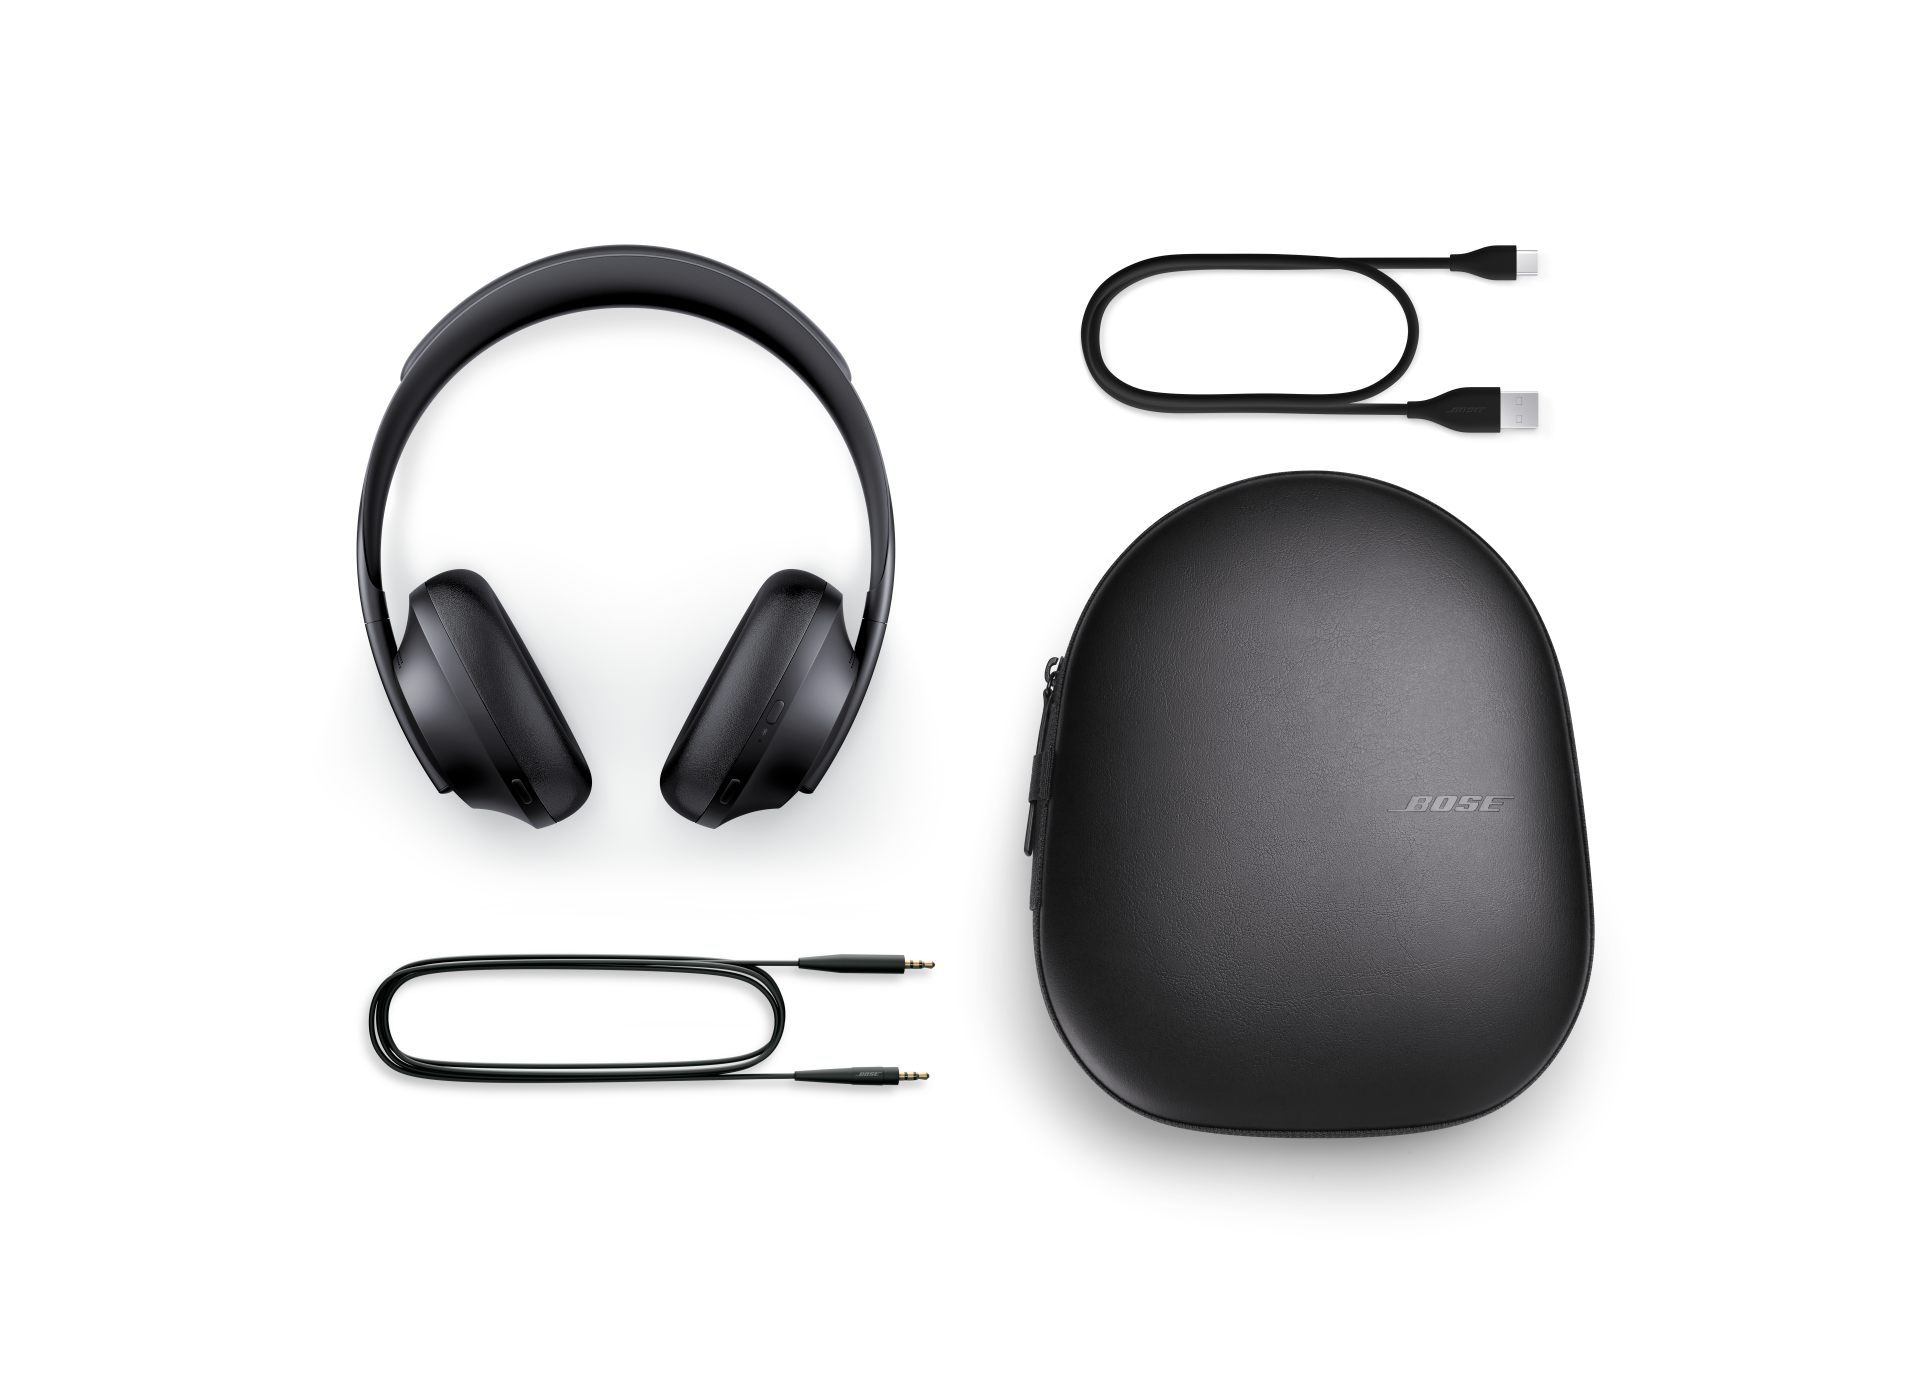 Bose Noise Cancelling Headphones 700 over-ear Wireless Bluetooth Earphones, Black - image 5 of 10